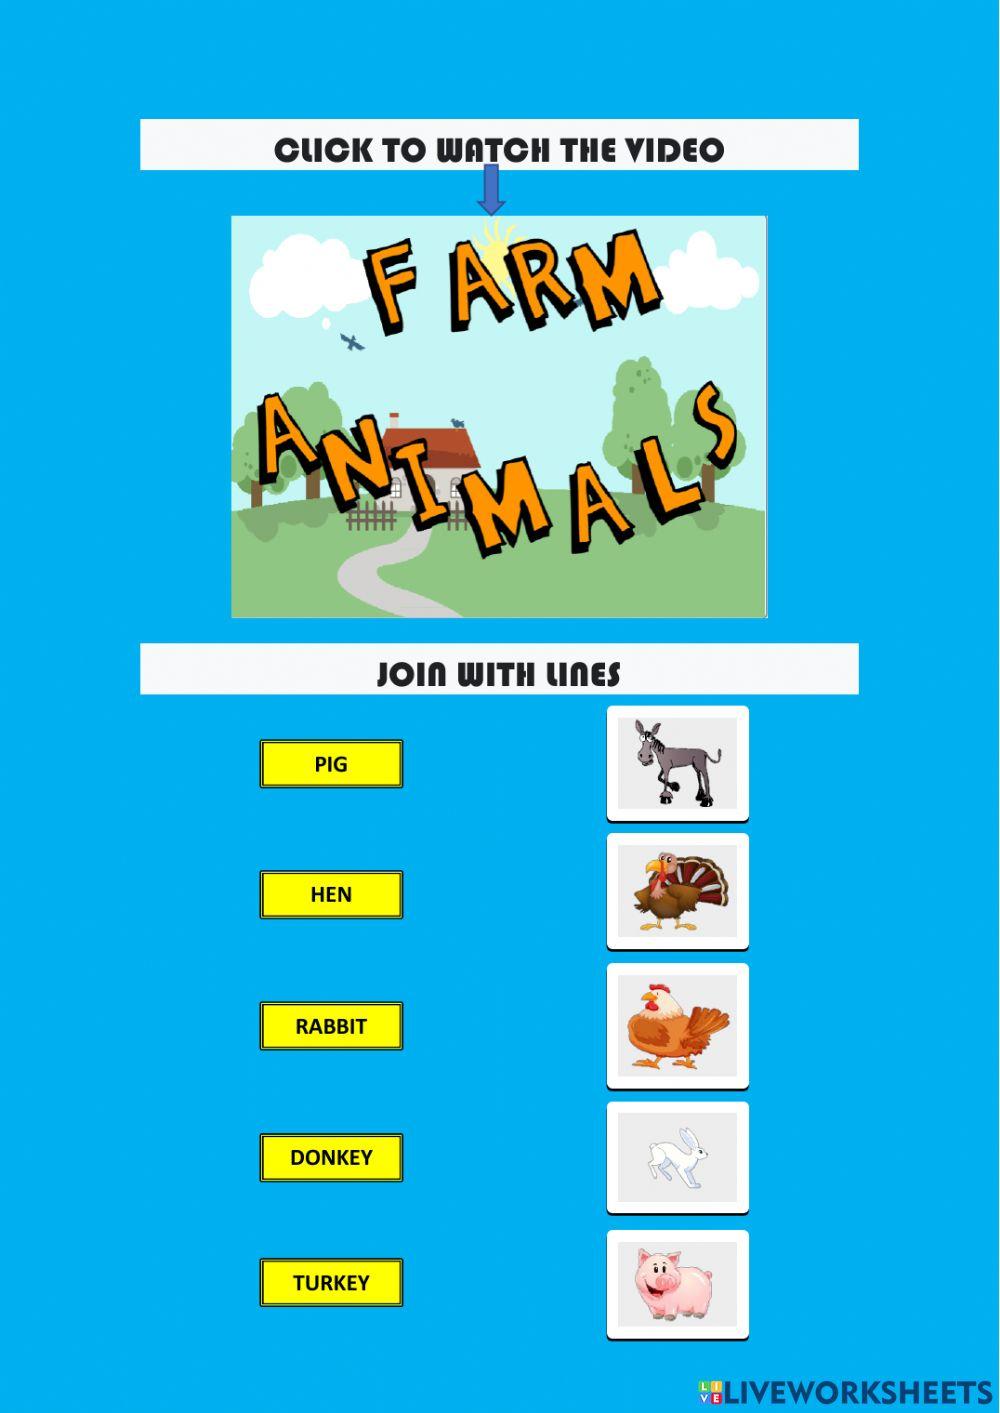 THE FARM ANIMALS